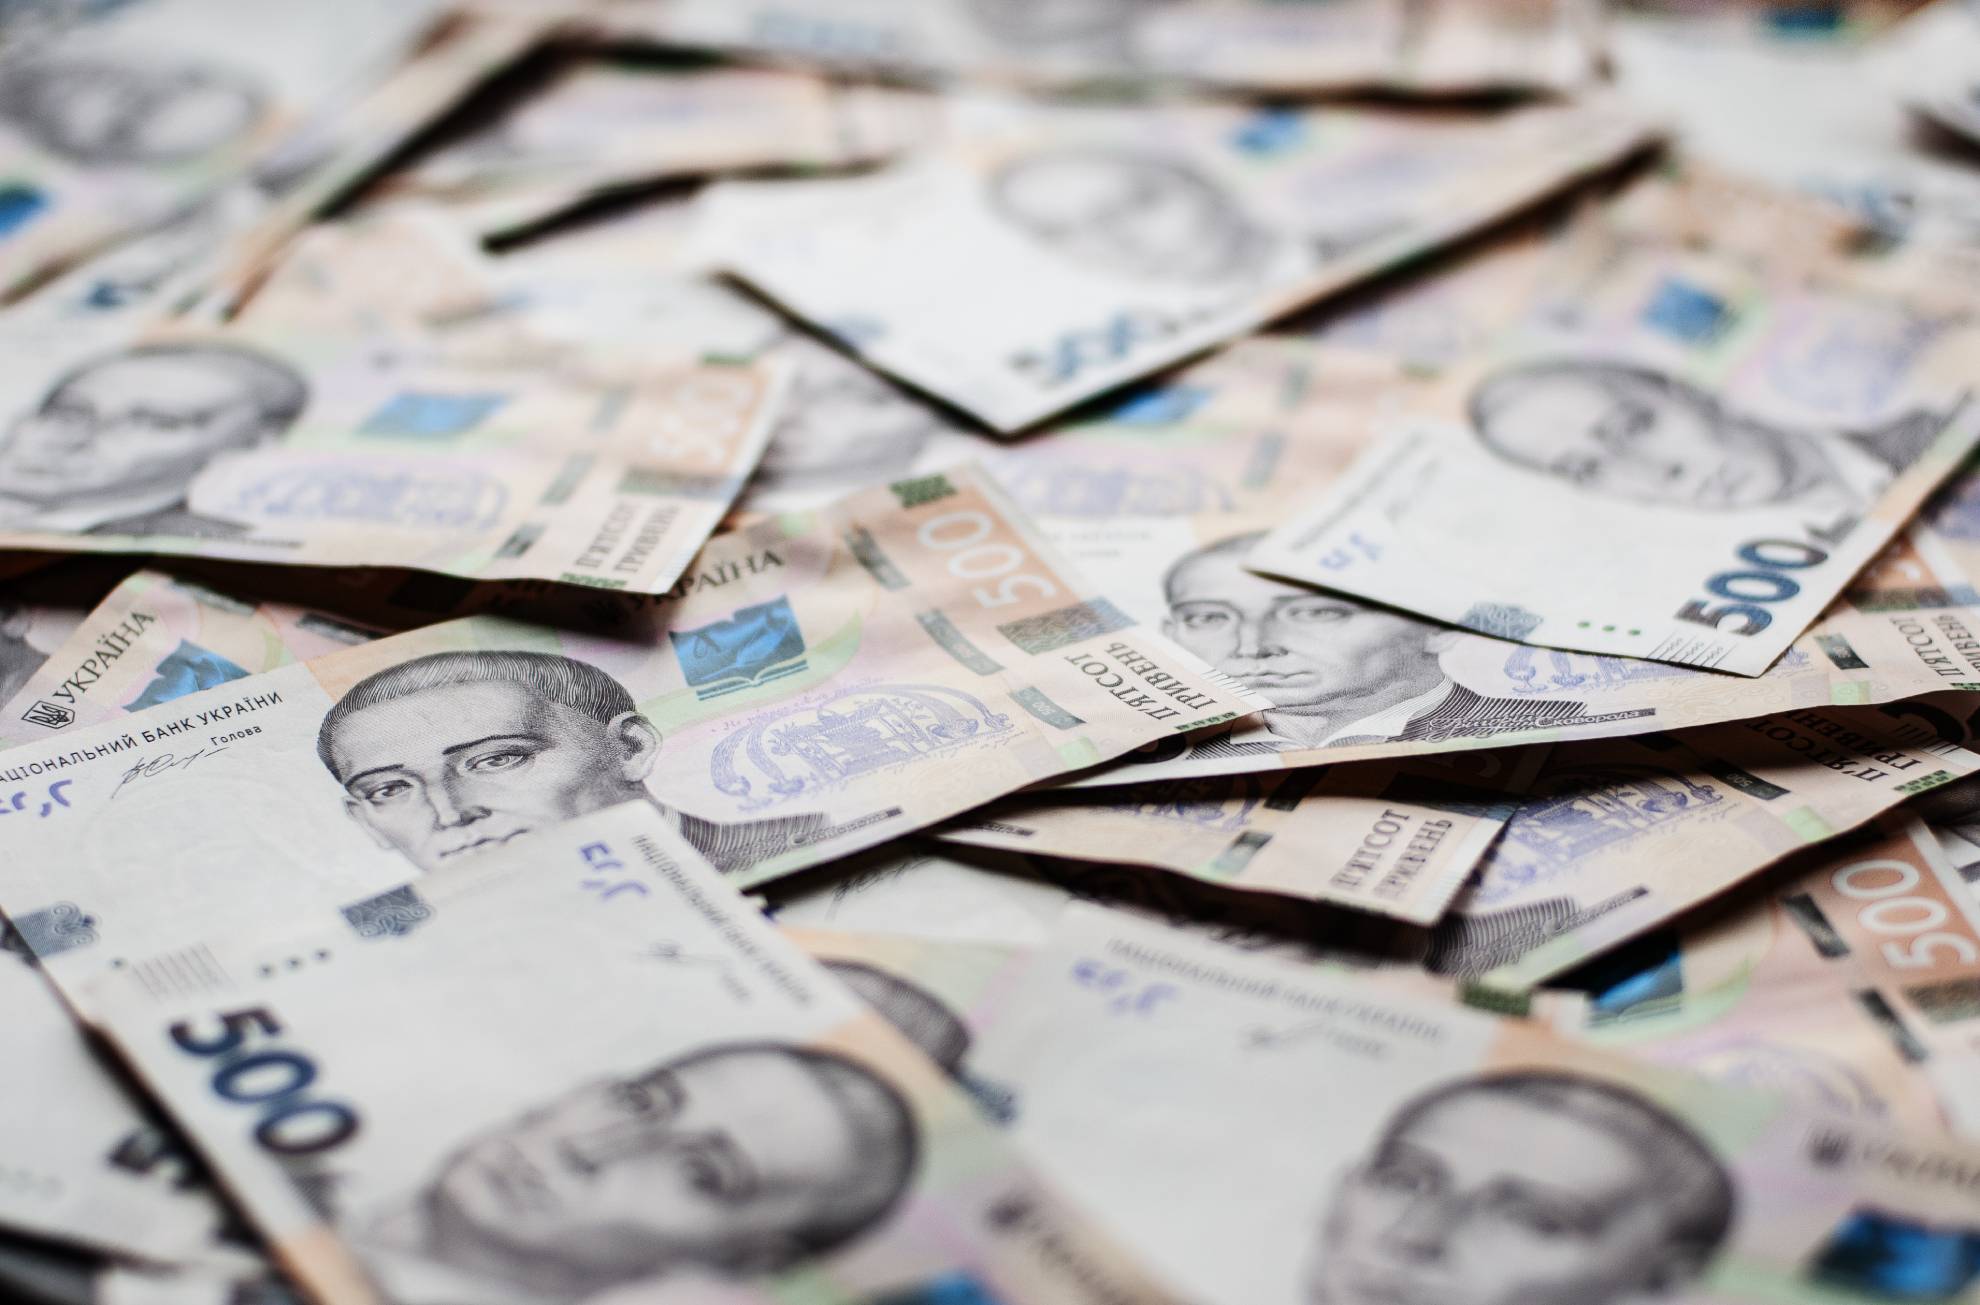 ukrainian-paper-money-bills-of-hryvnias-financial-2021-08-30-01-18-08-utc (1)